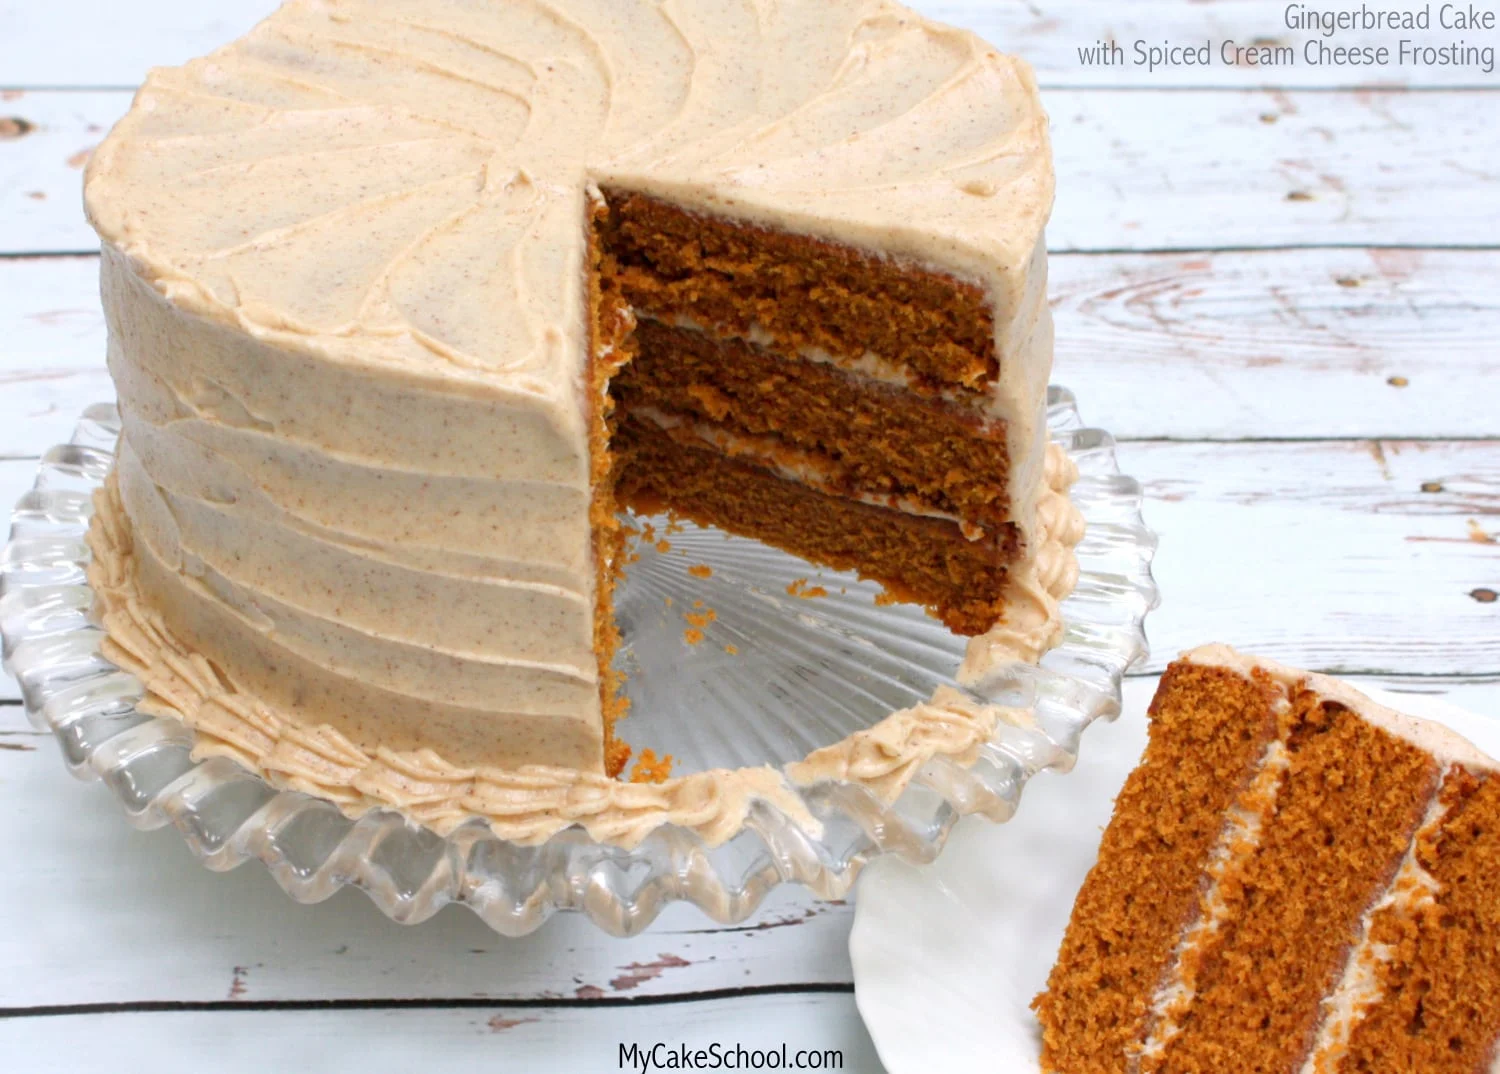 https://www.mycakeschool.com/images/2015/09/Gingerbread-Cake-Recipe-image.webp